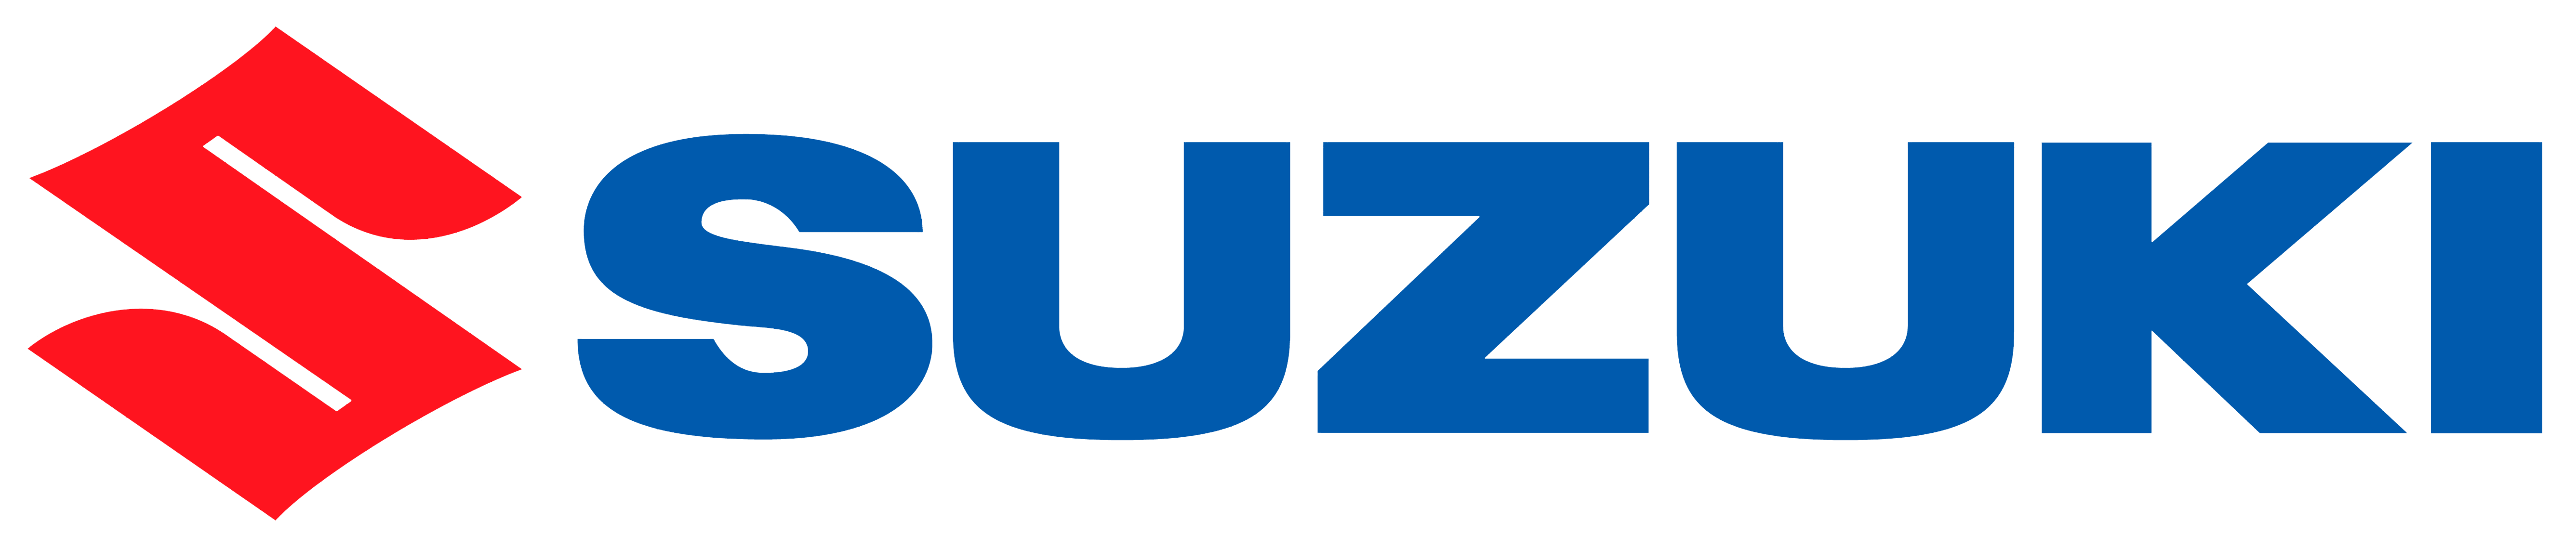 Suzuki Samurai Png Logo